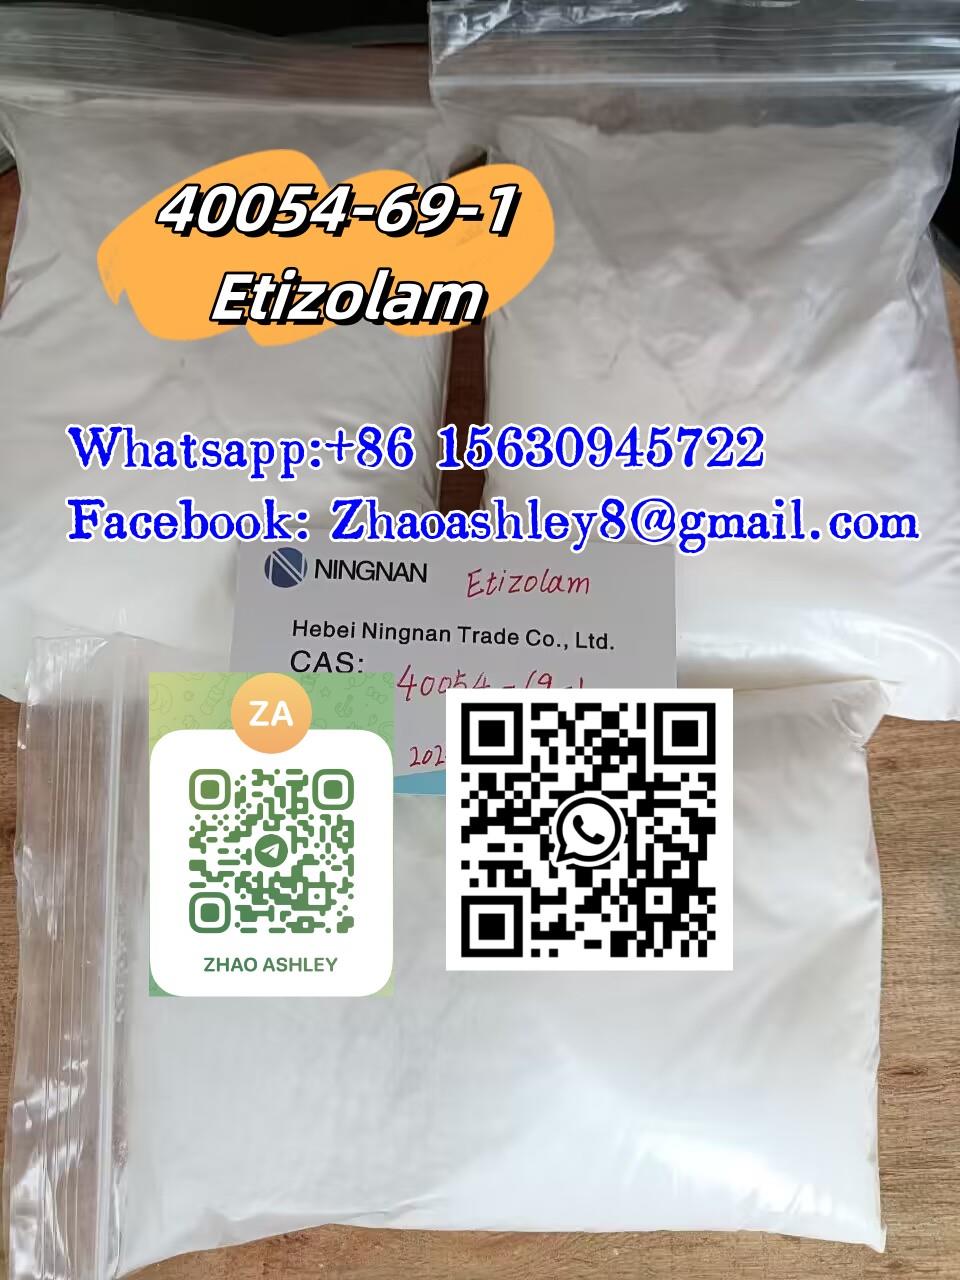 cas 40054-69-1 Etizolam Factory wholesale supply, competitive price!